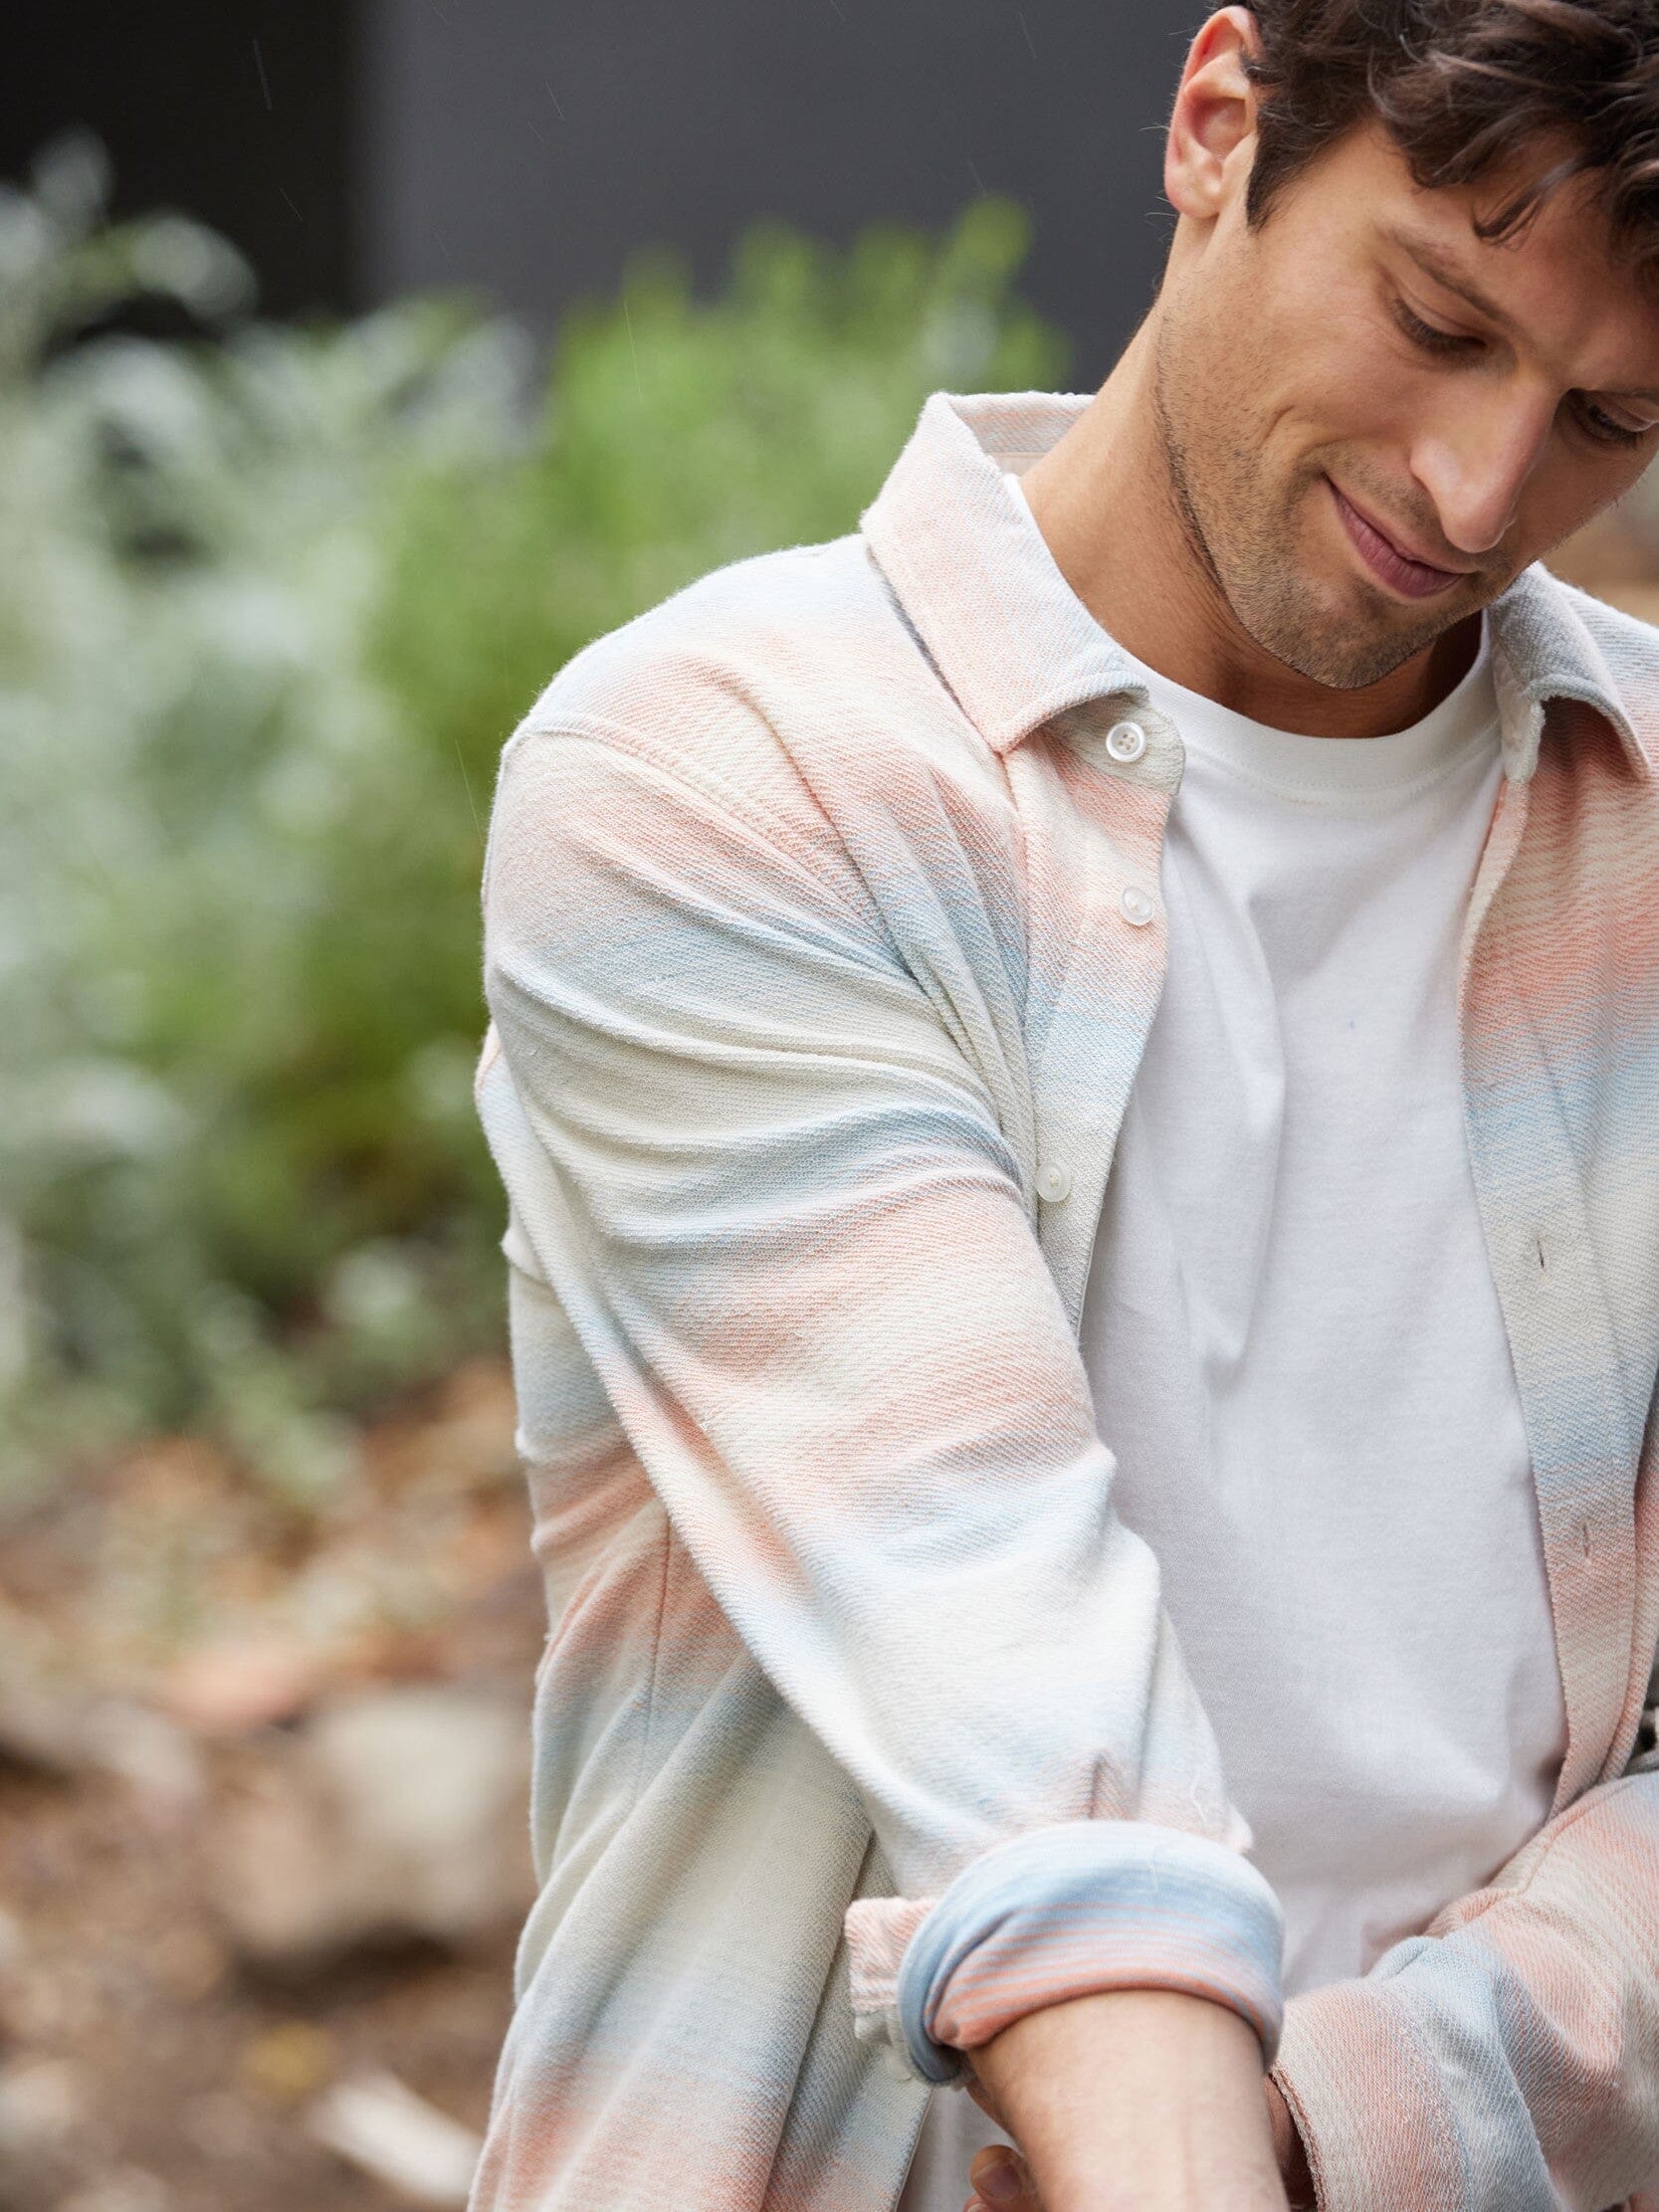 Mika Yarn Dye Stripe Triblend Terry Button-Down Shirt Mens Outerwear Sweatshirt Threads 4 Thought 